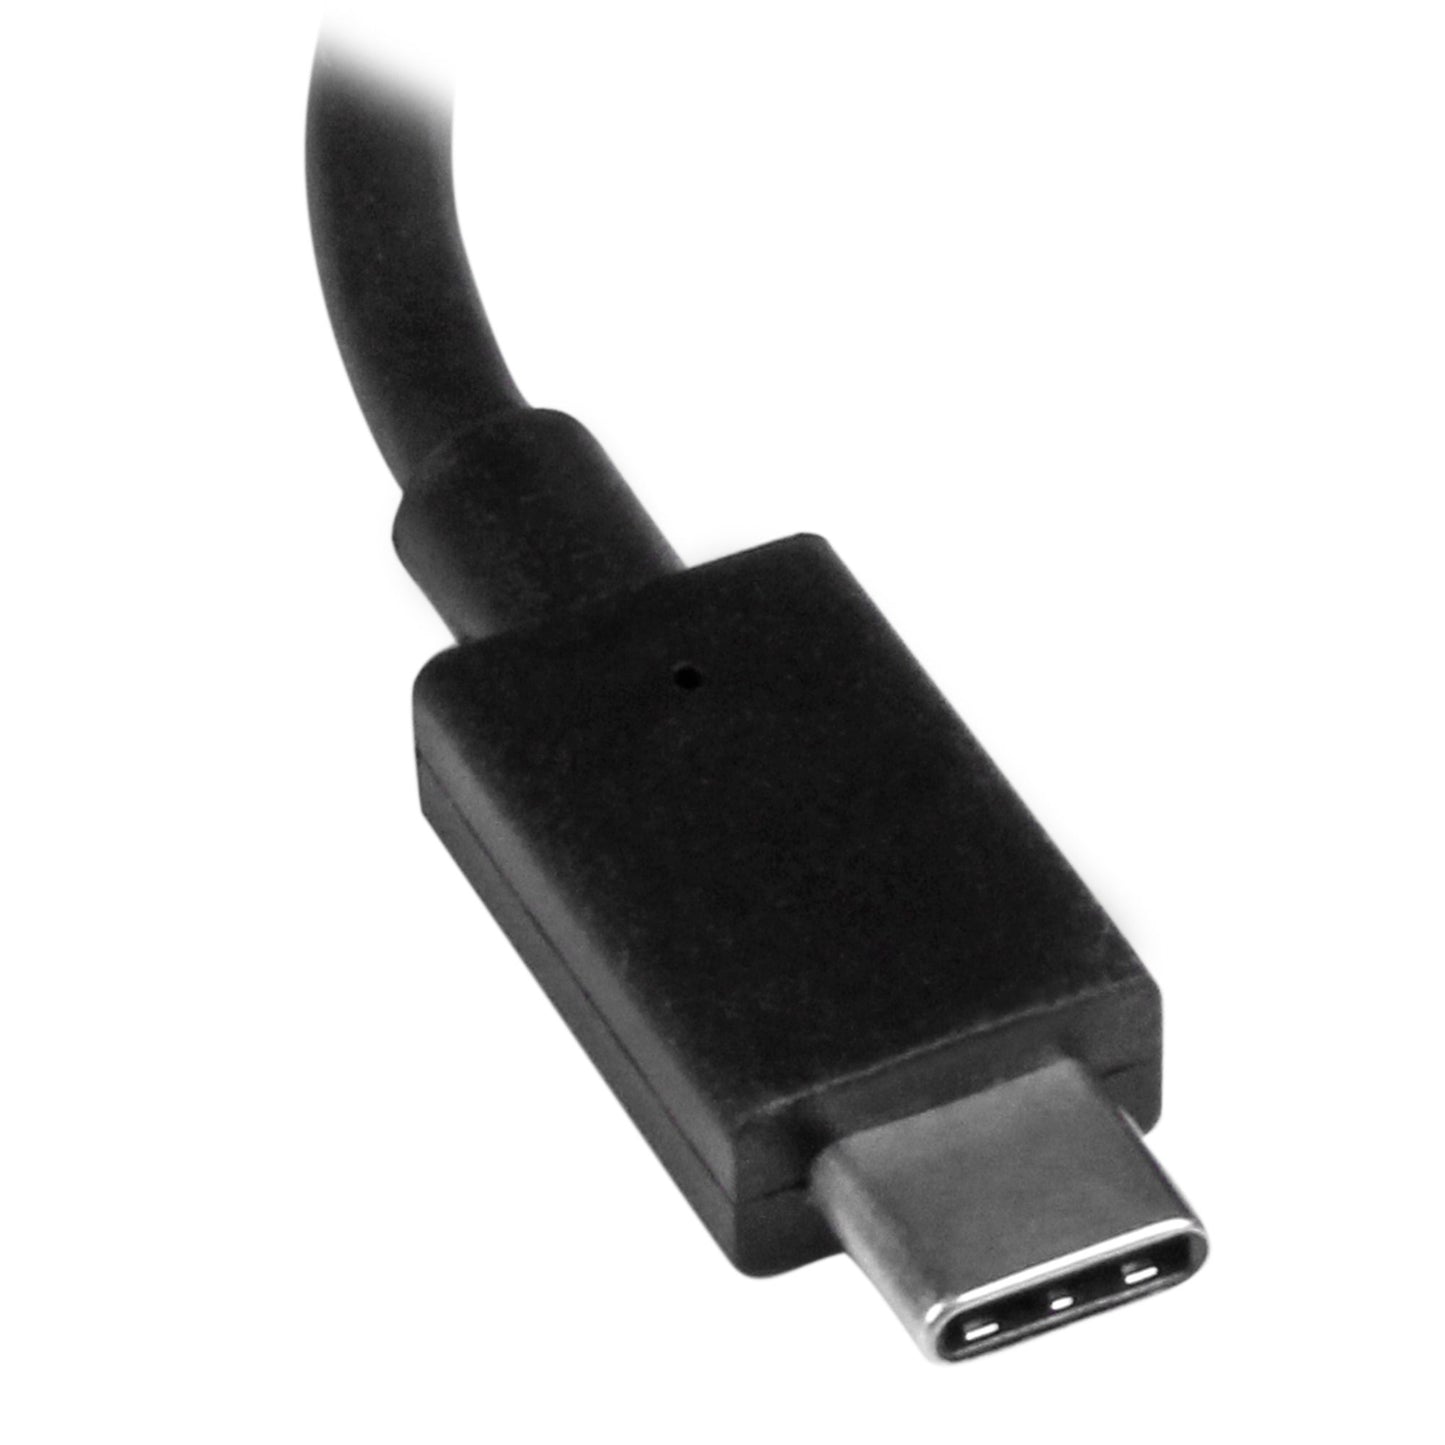 StarTech.com Adaptador Gráfico USB-C a HDMI 4K30 - Convertidor de Video - Inventario Limitado - Vea Dispositivo Similar CDP2HD4K60W - Extremo Secundario: 1 x 19-pin HDMI 1.4 Digital Audio/Video - Female - Admite hasta3840 x 2160 - Negro